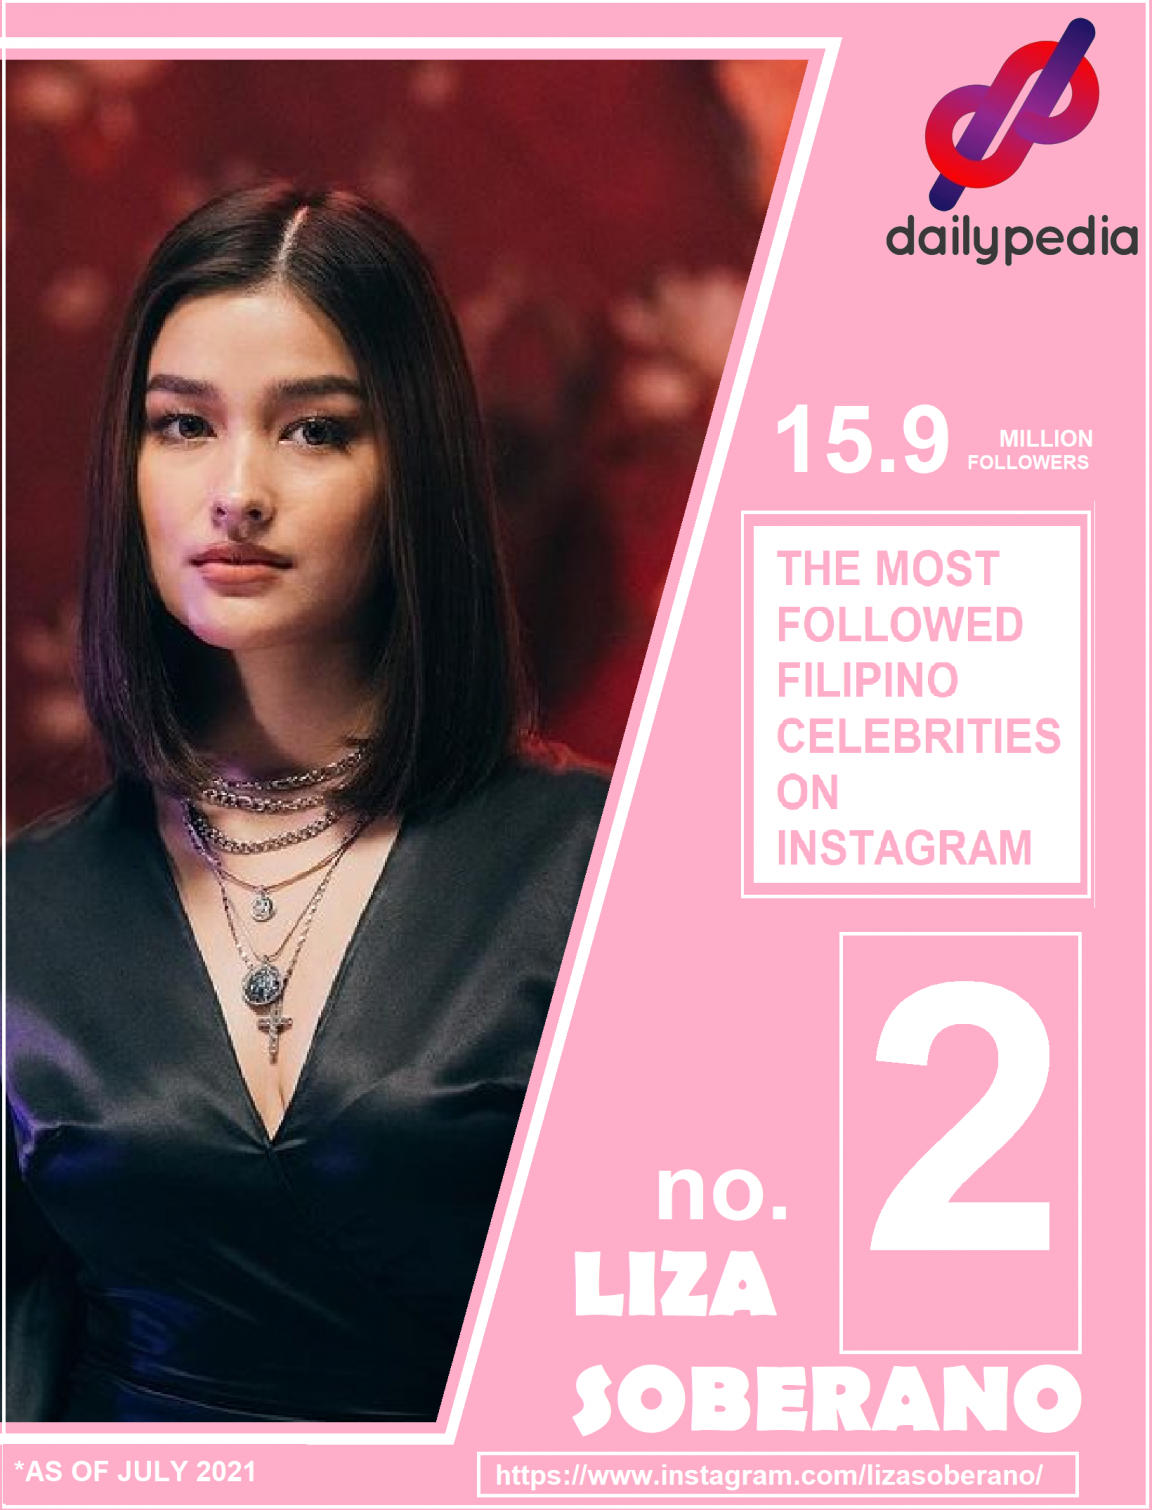 LIST The 10 Most Followed Filipino Celebrities on Instagram DailyPedia